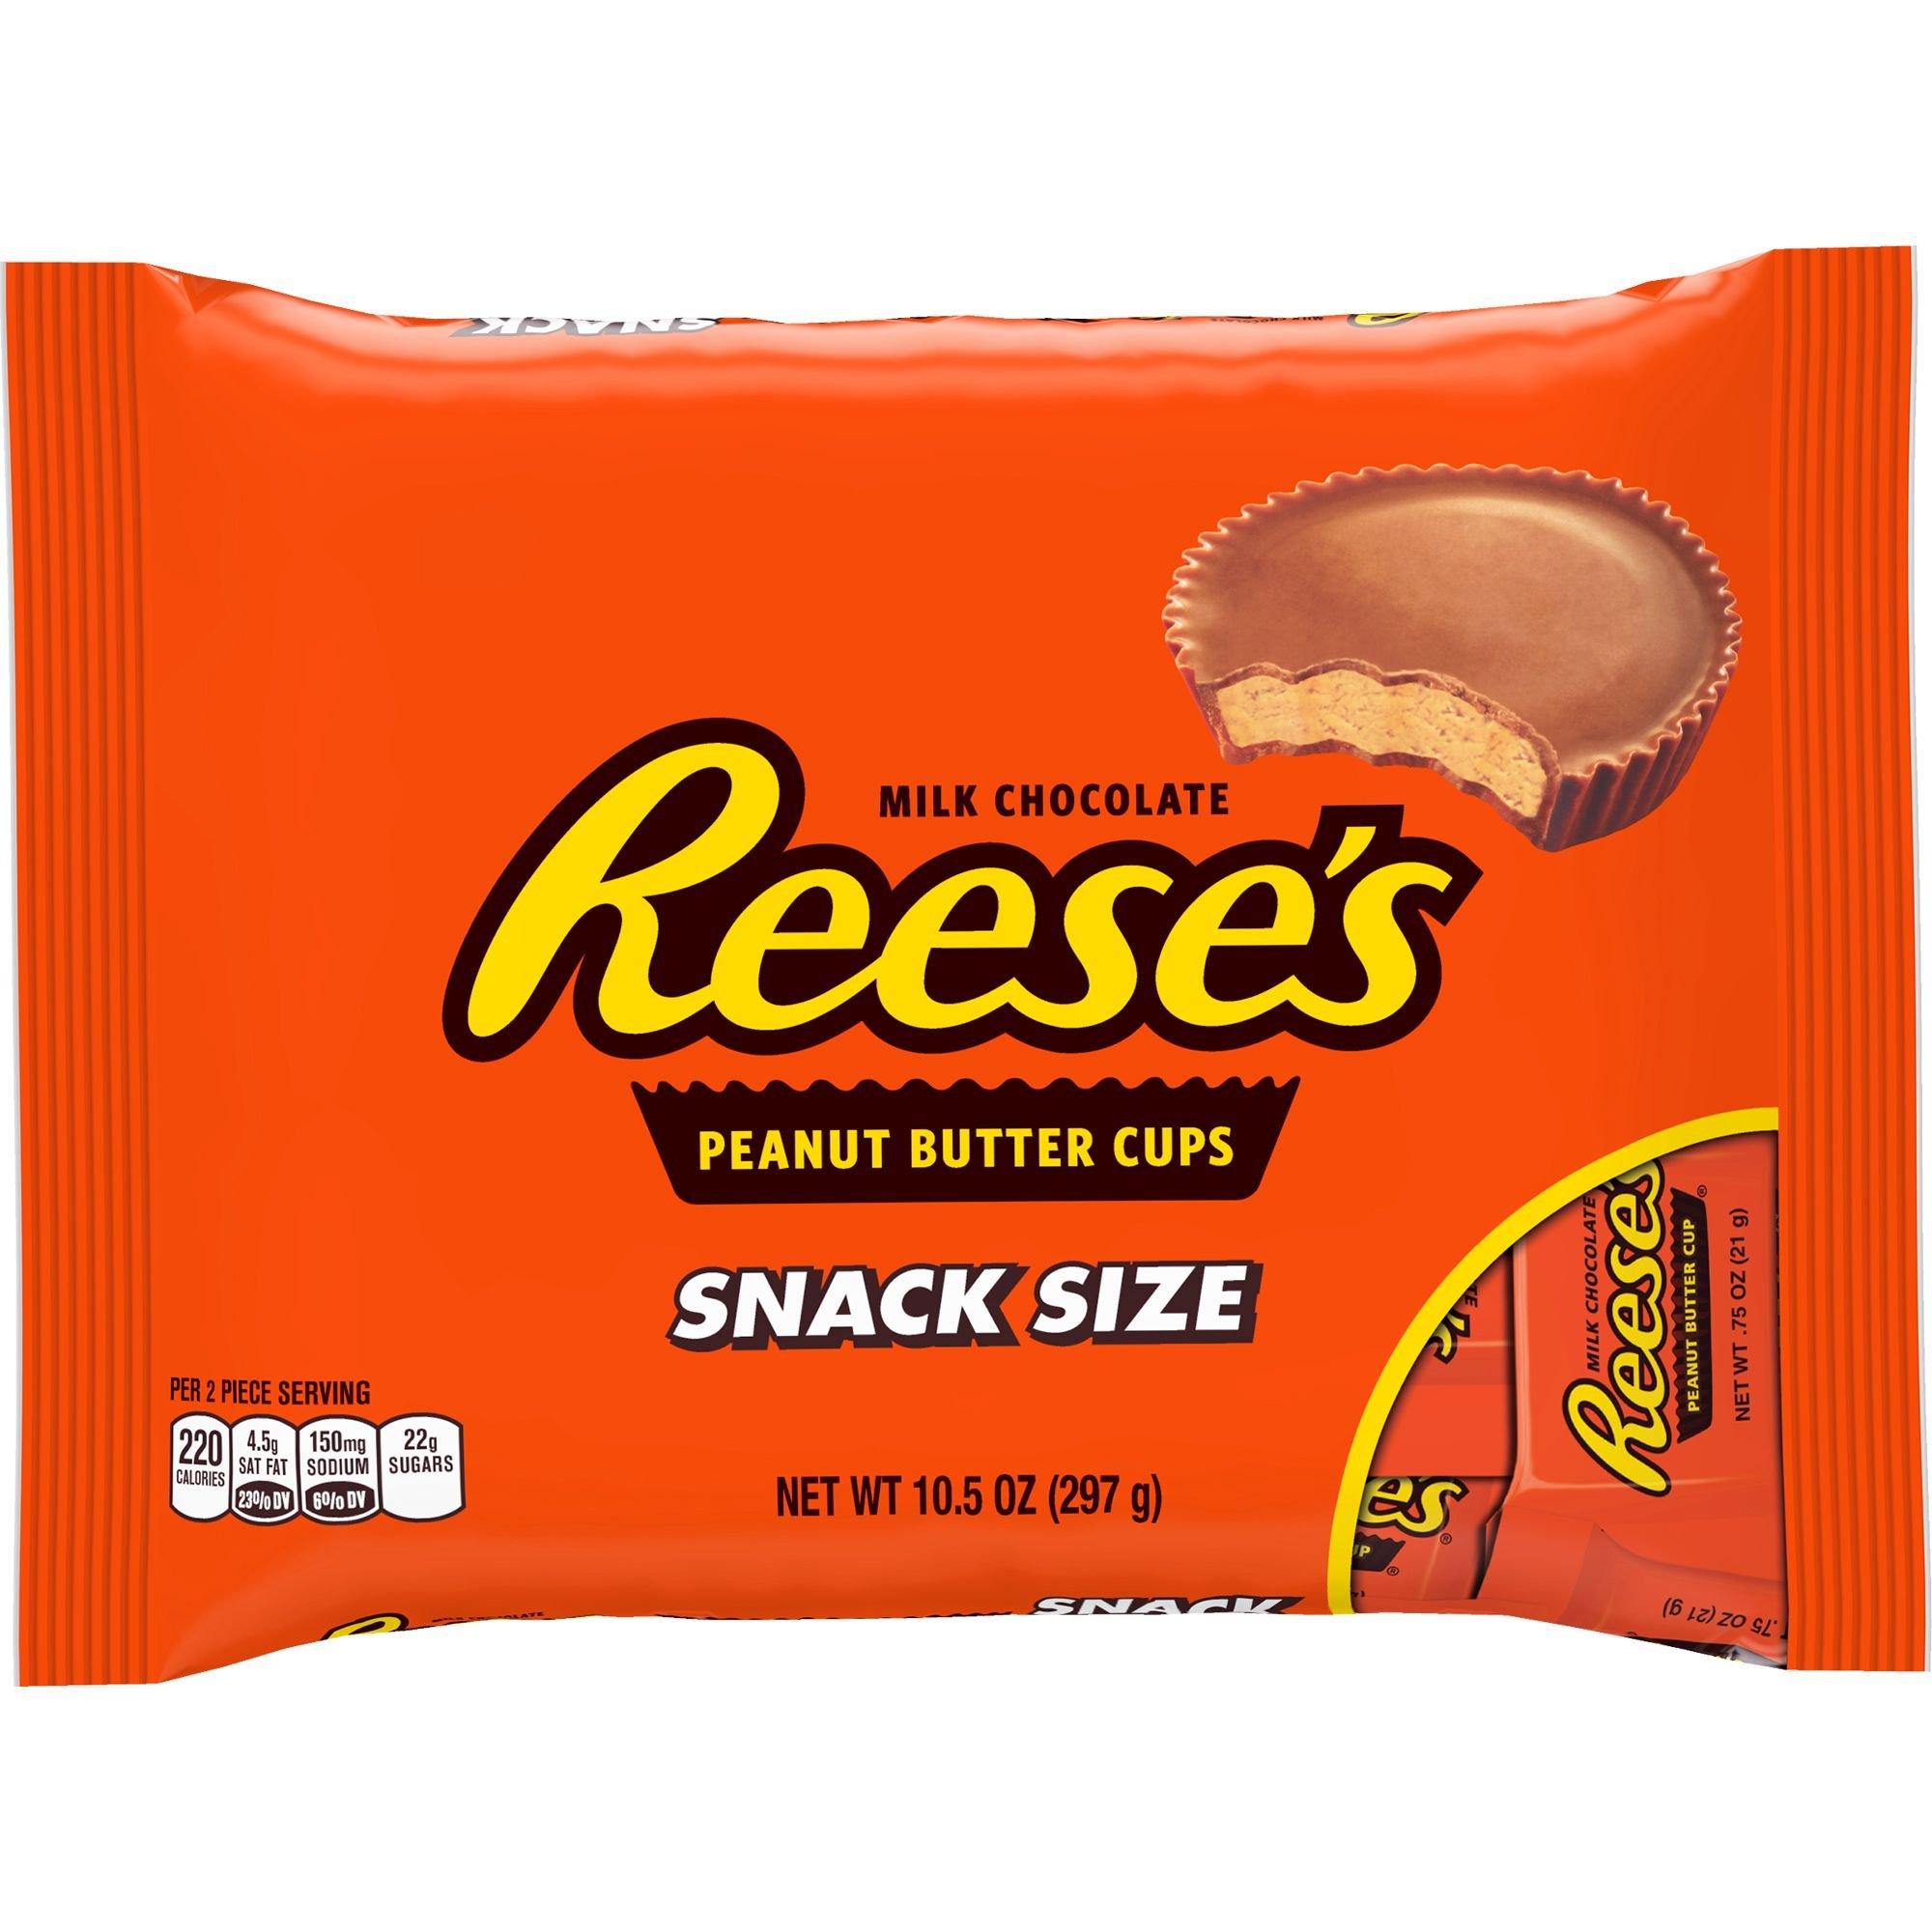 Reese's Peanut Butter Cups, Milk Chocolate & Peanut Butter, Snack Size - 10.5 oz